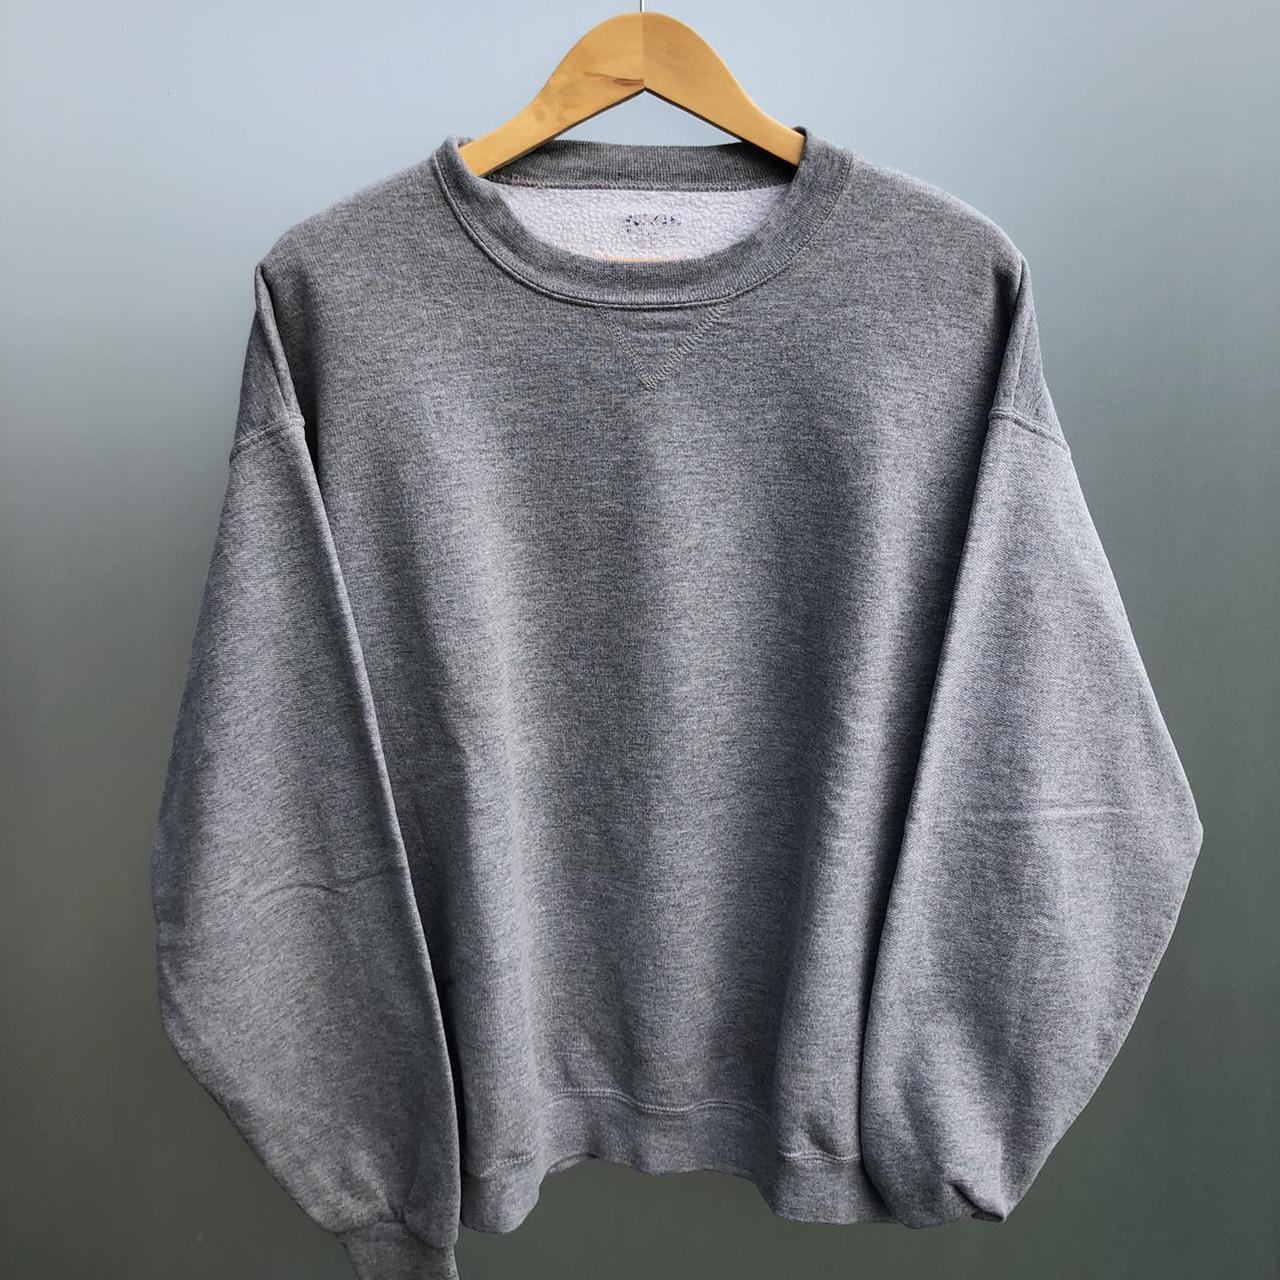 Plain grey vintage sweatshirt perfect to wear with... - Depop